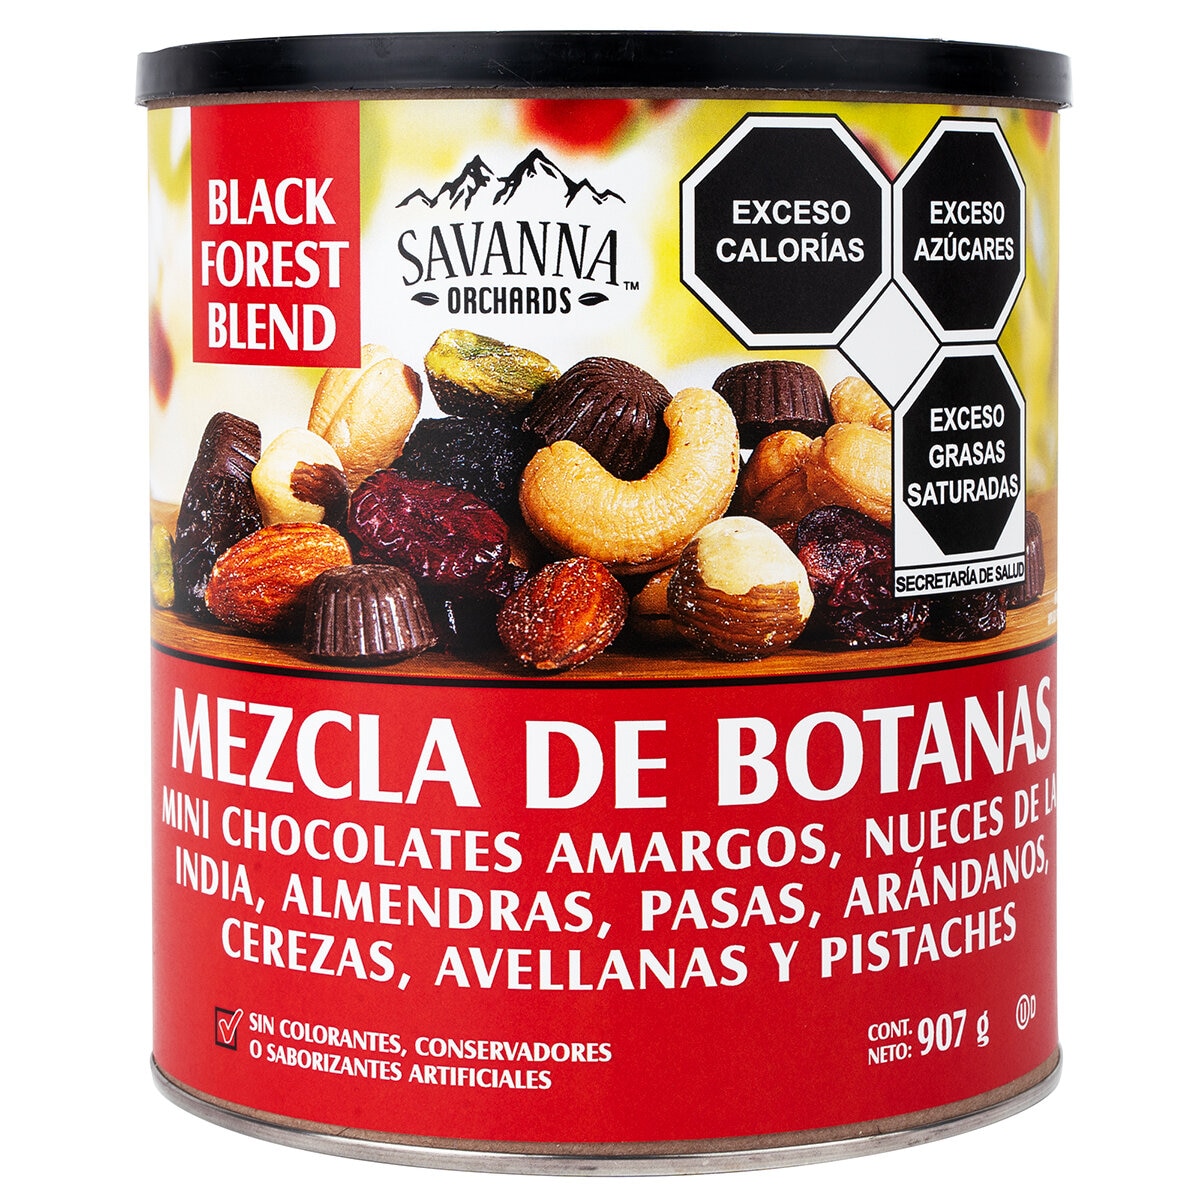 Savanna Orchards Mezcla de Botanas 907 g